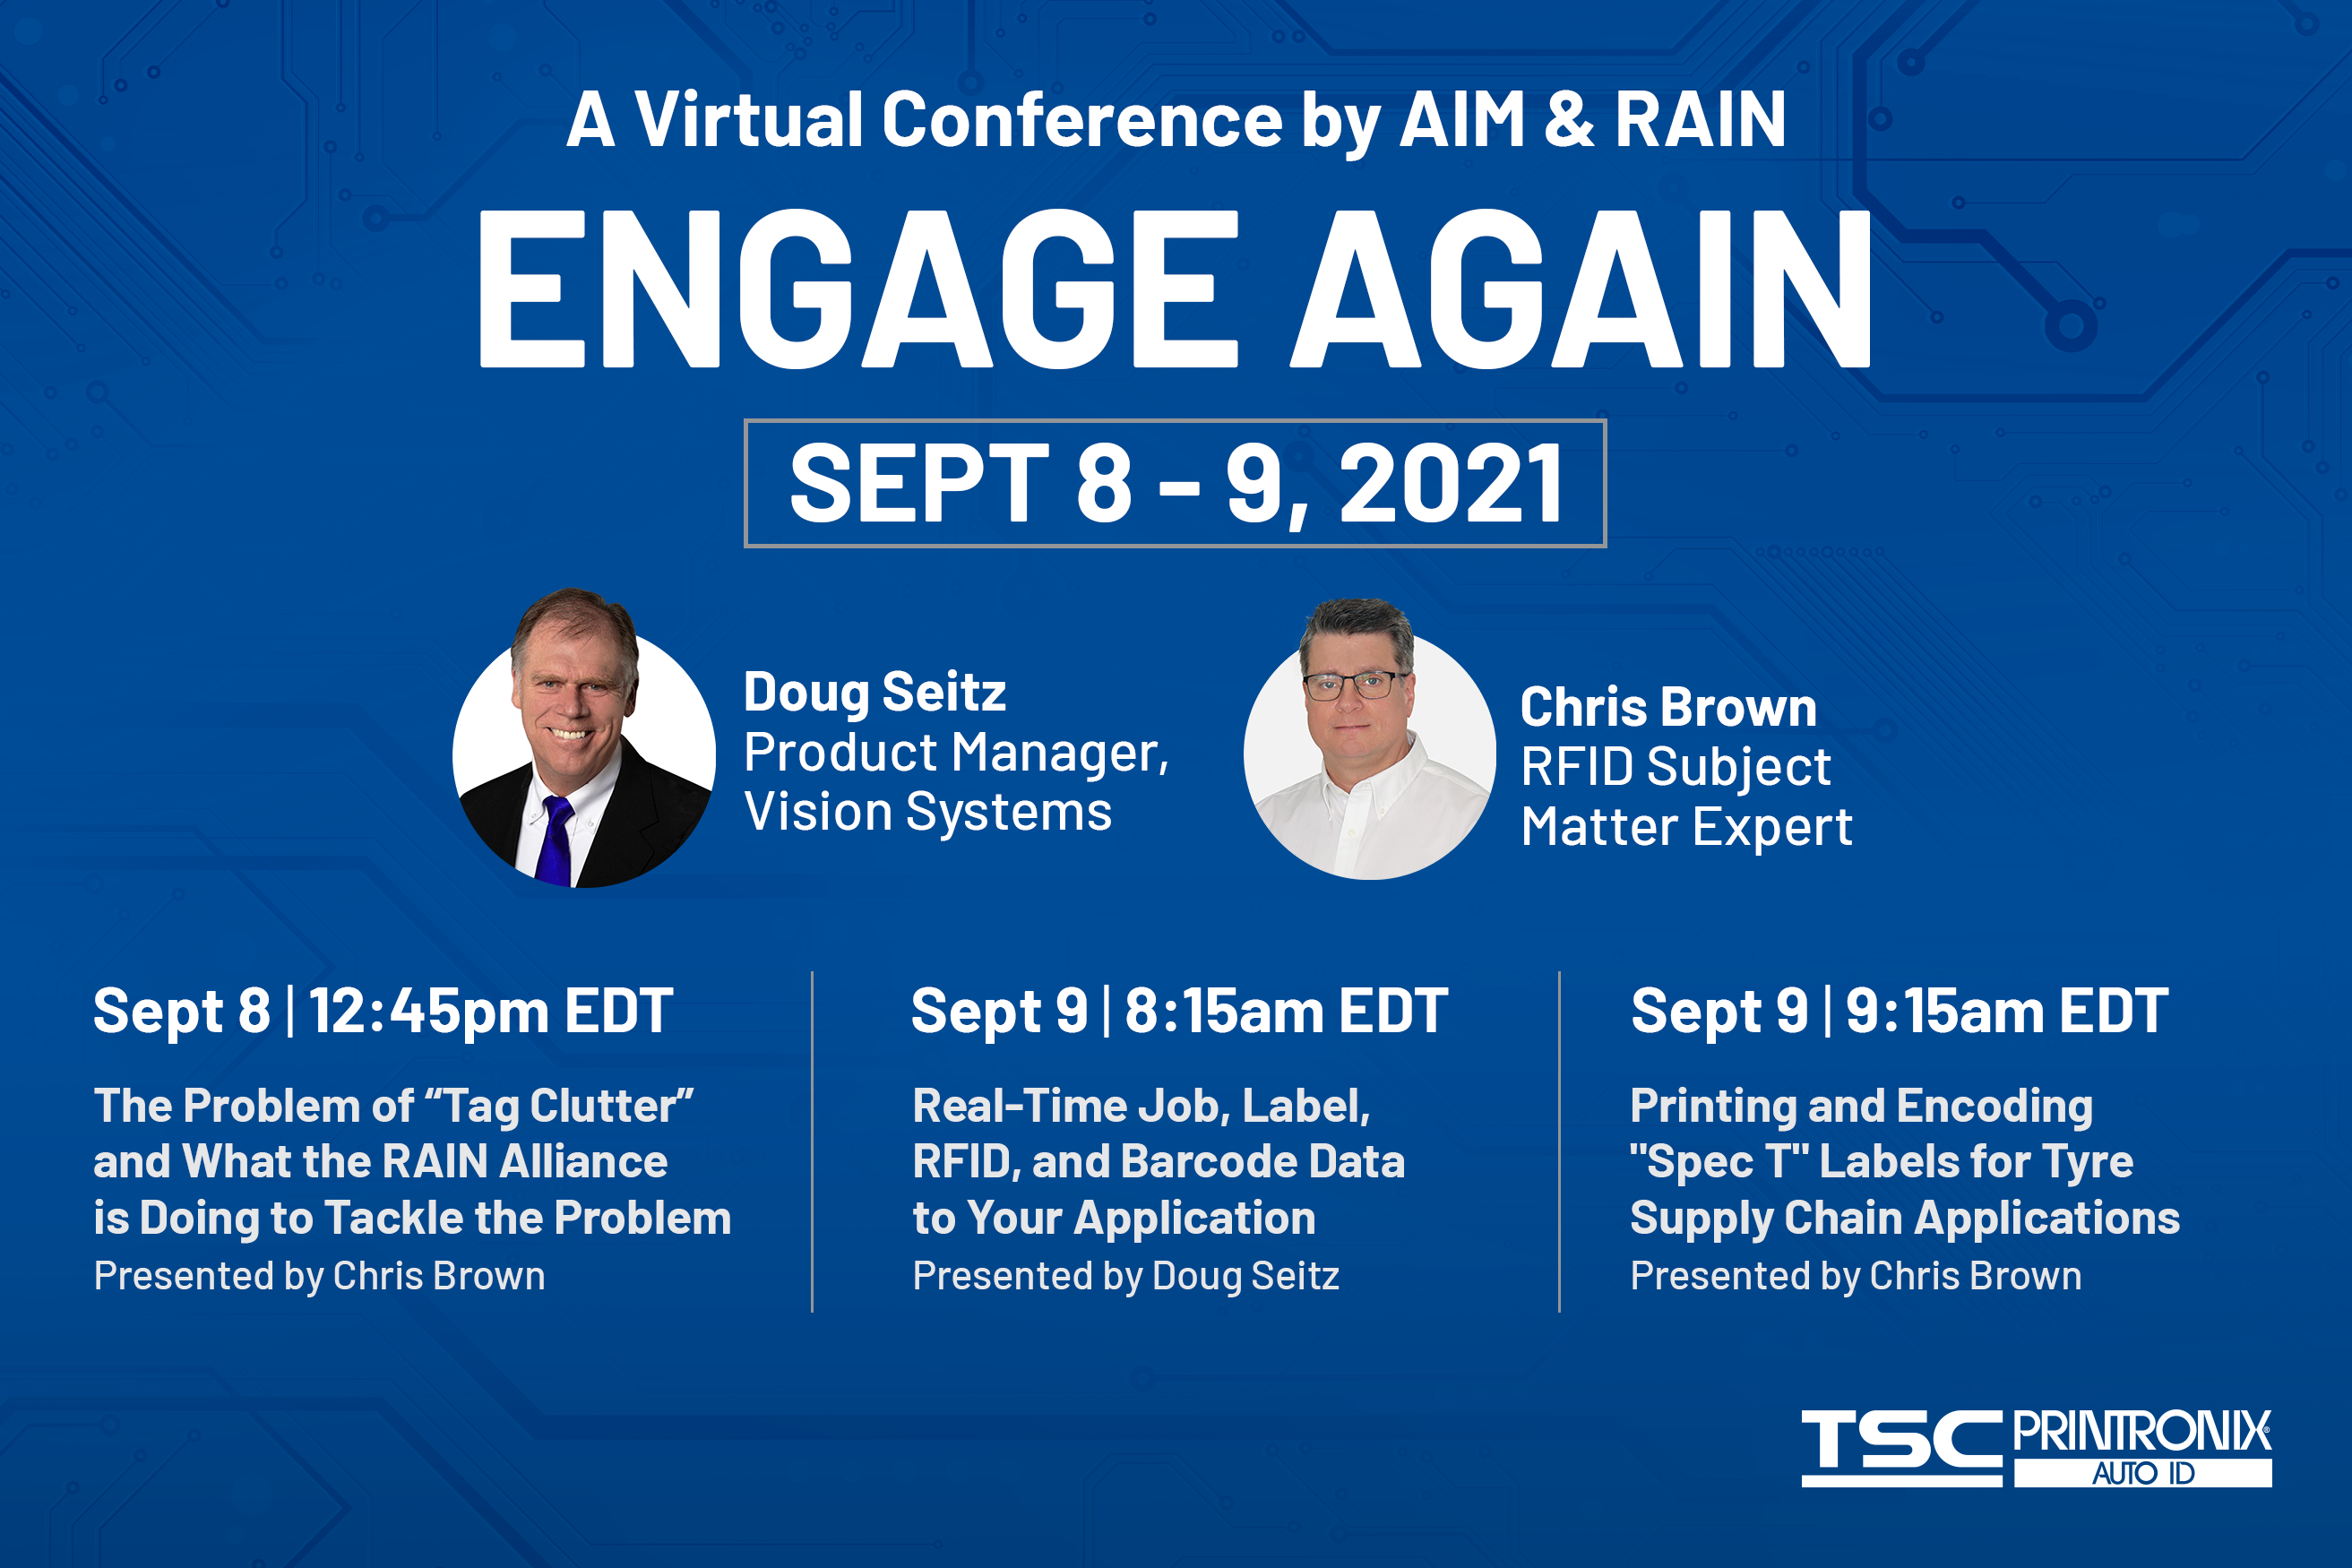 AIM and RAIN “engage again” digital conference 